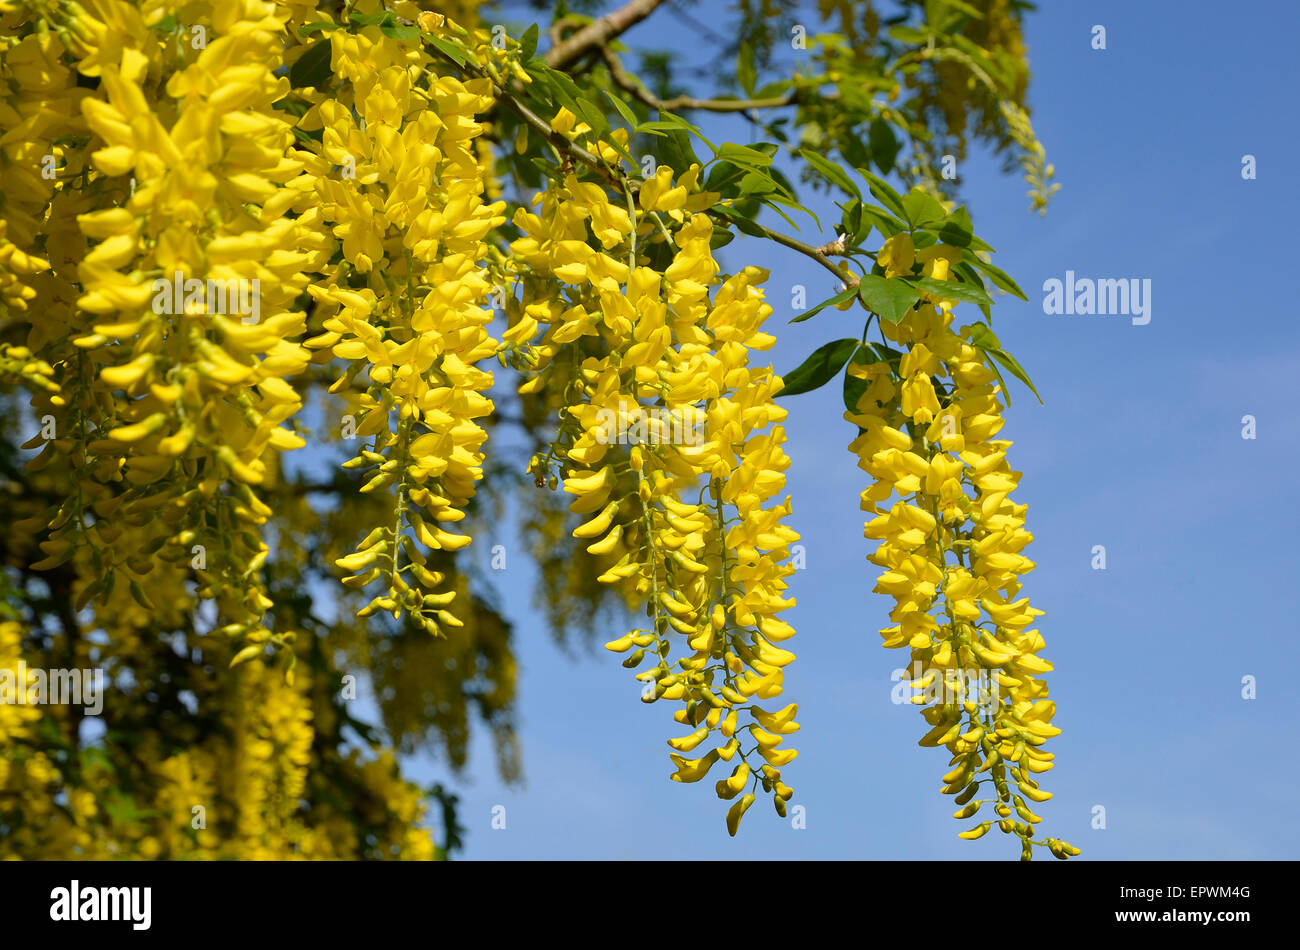 Bright yellow flowers of a Laburnum tree (often called Golden Chain/Rain), a common ornamental tree in English gardens. Stock Photo